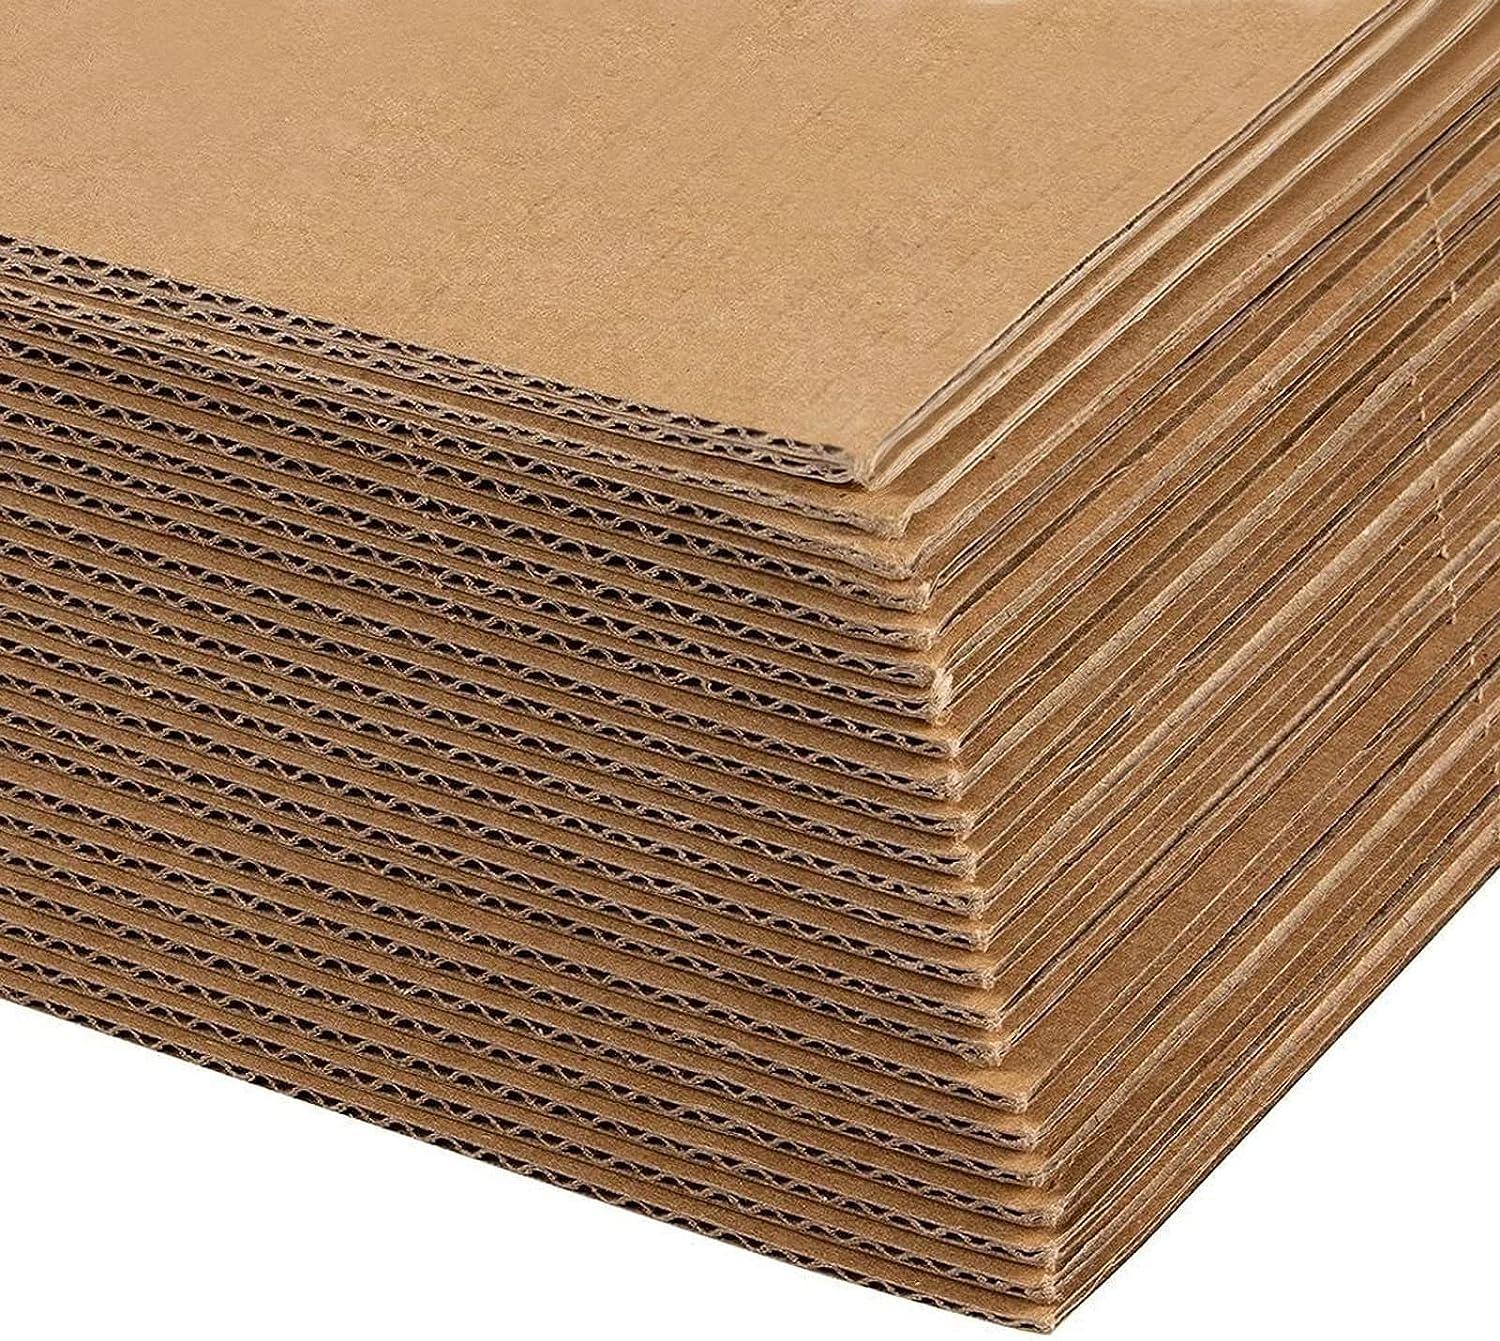 Flat Cardboard Sheets and Cardboard Pads